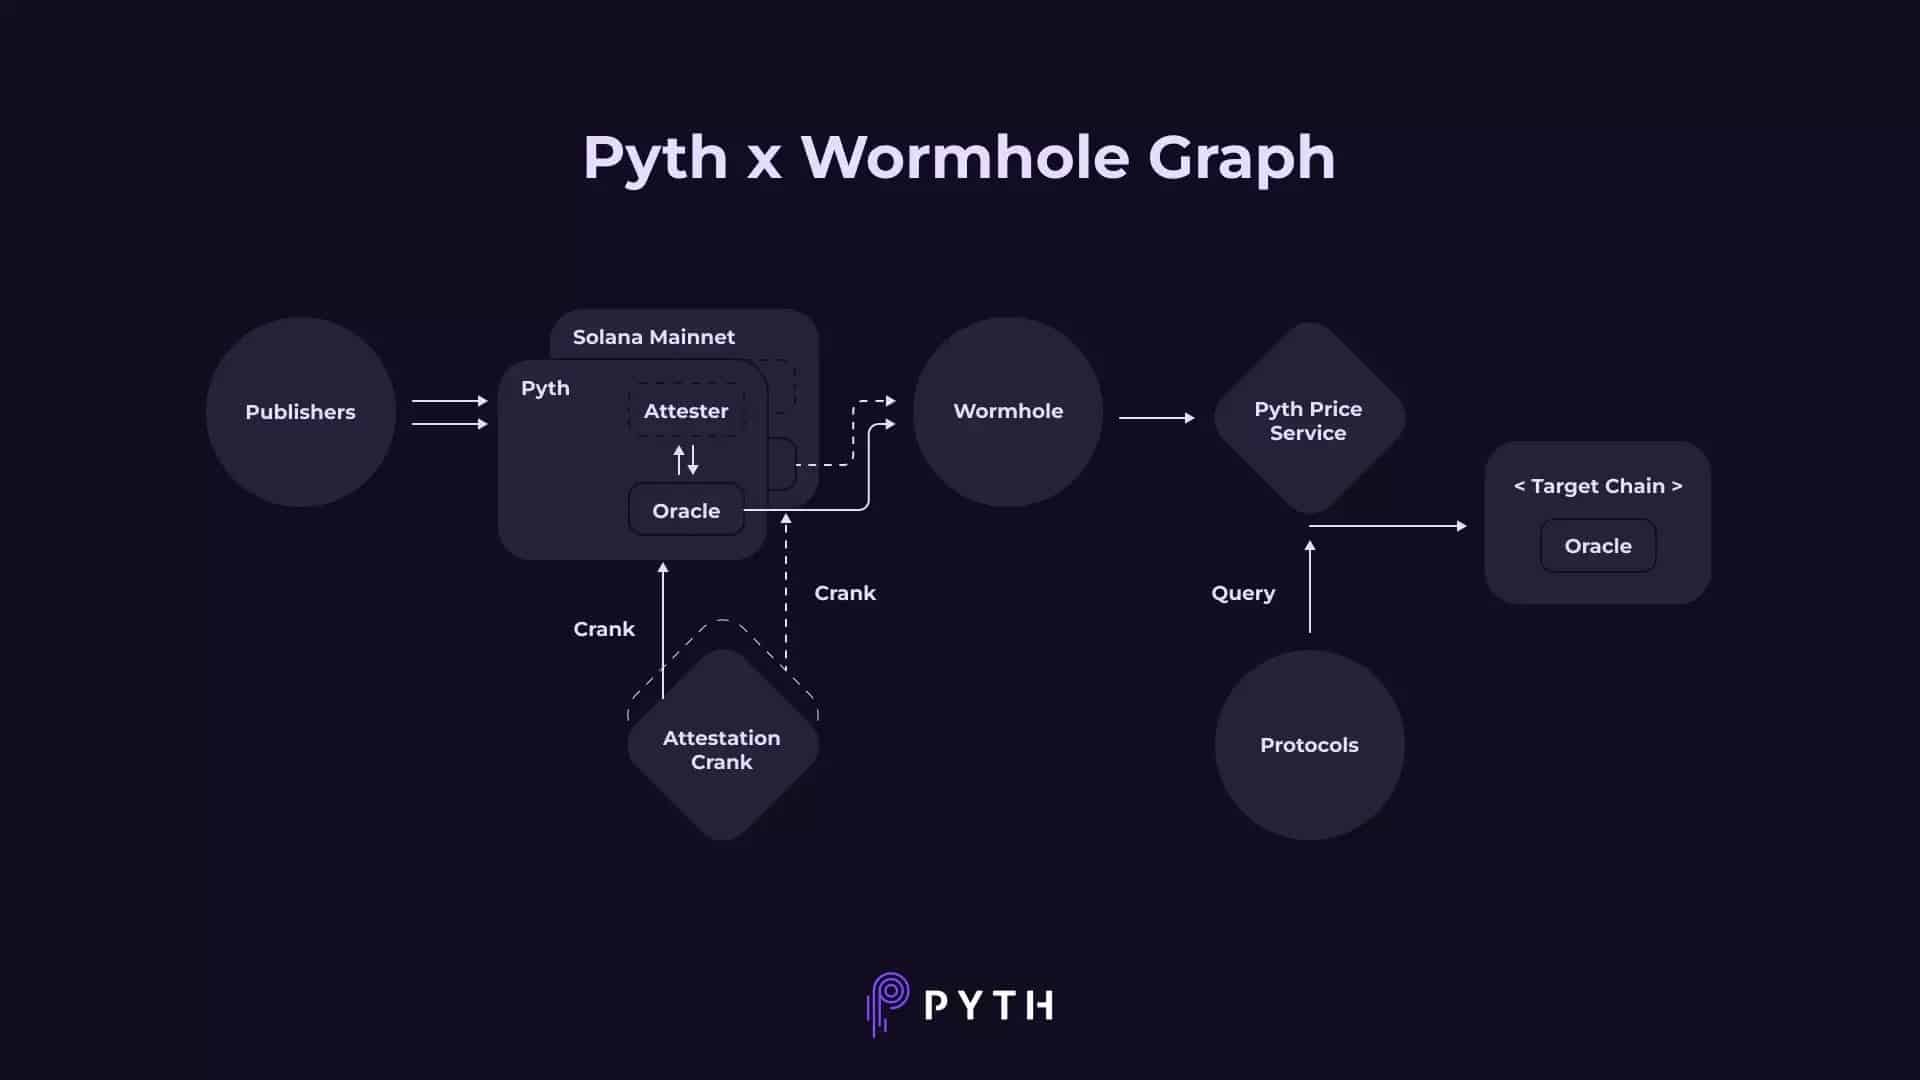 Schema van de gegevensoverdracht via Pyth Network en het Wormhole-protocol